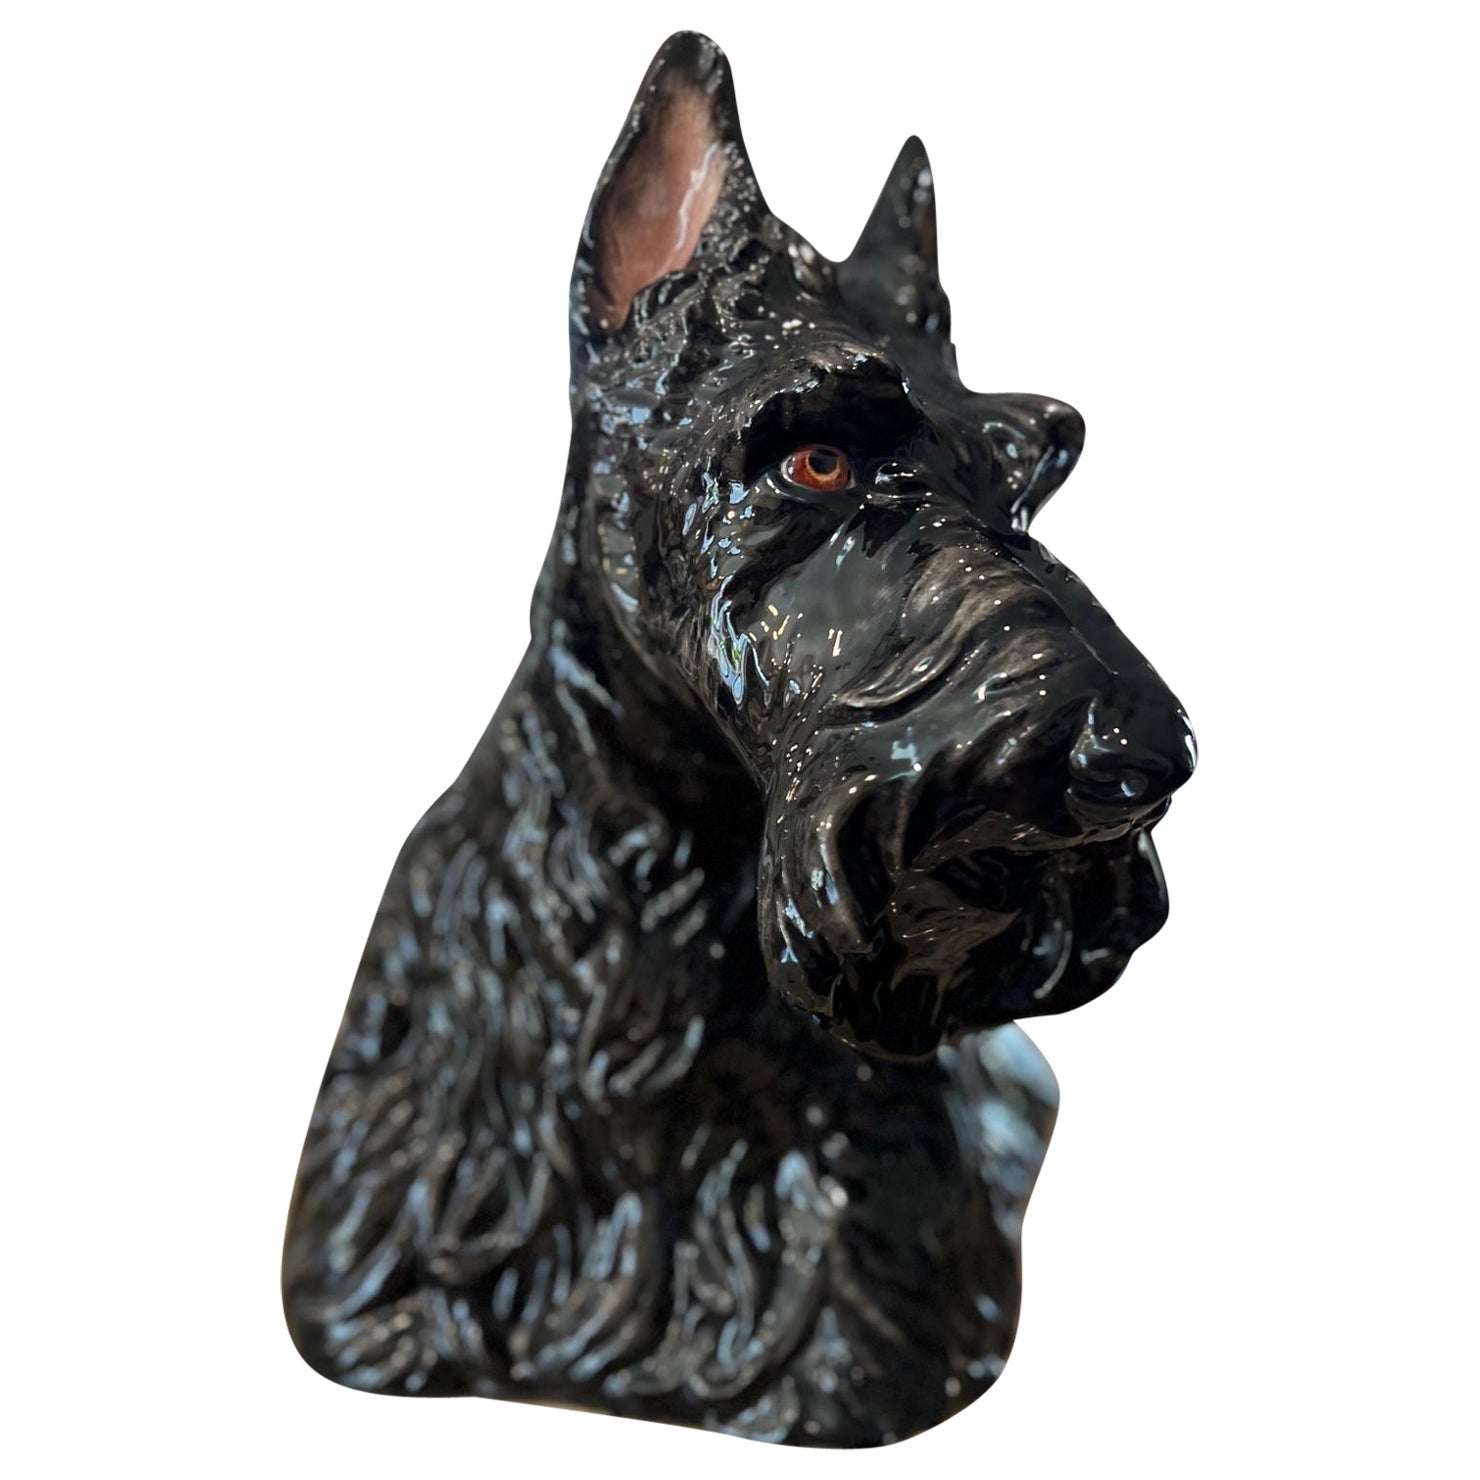 Vintage Ceramic Scottie Dog Figure - The Townsend Ceramic and Glass Co. Florida